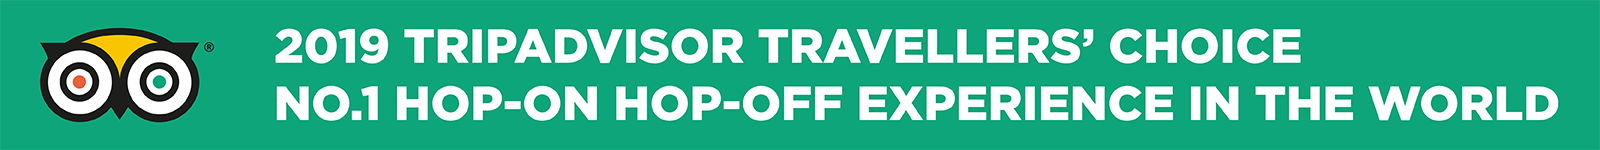 2019 TripAdvisor Travellers' Choice no.1